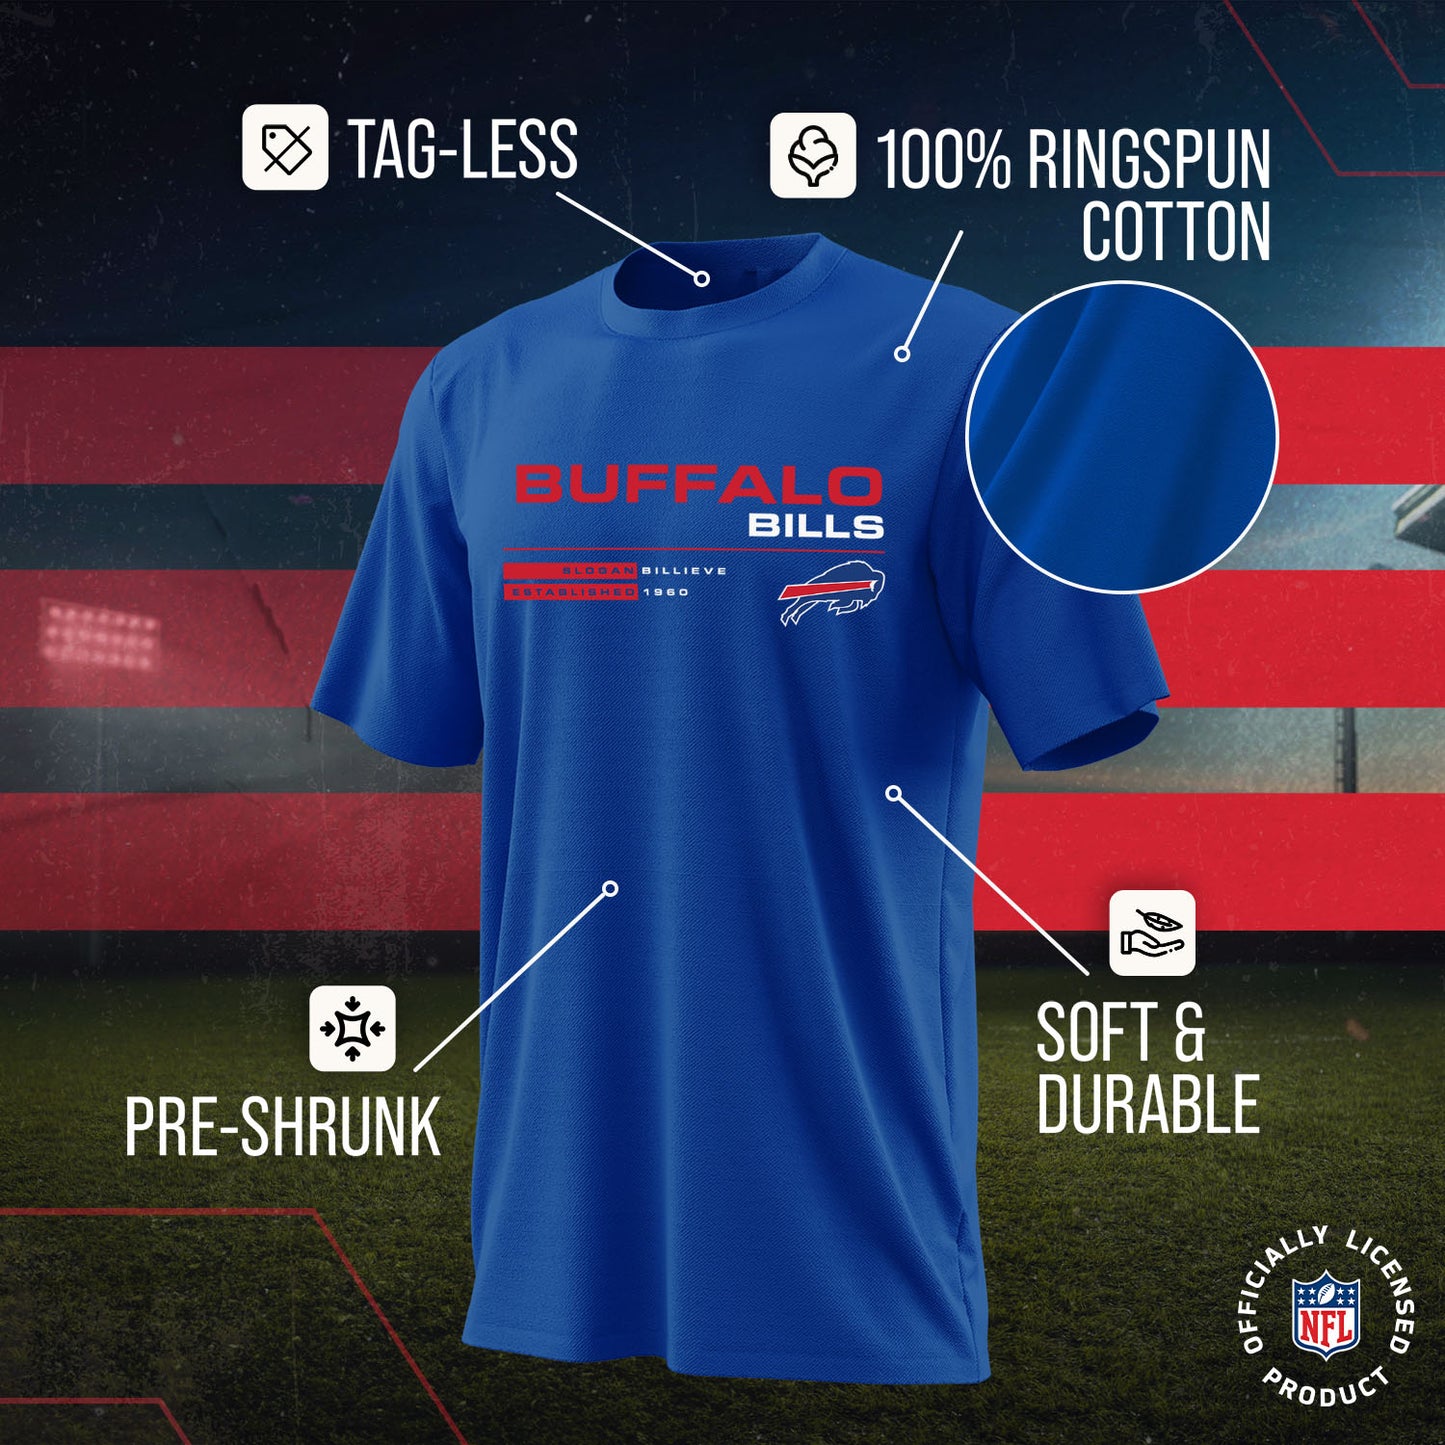 Buffalo Bills Adult NFL Speed Stat Sheet T-Shirt - Royal